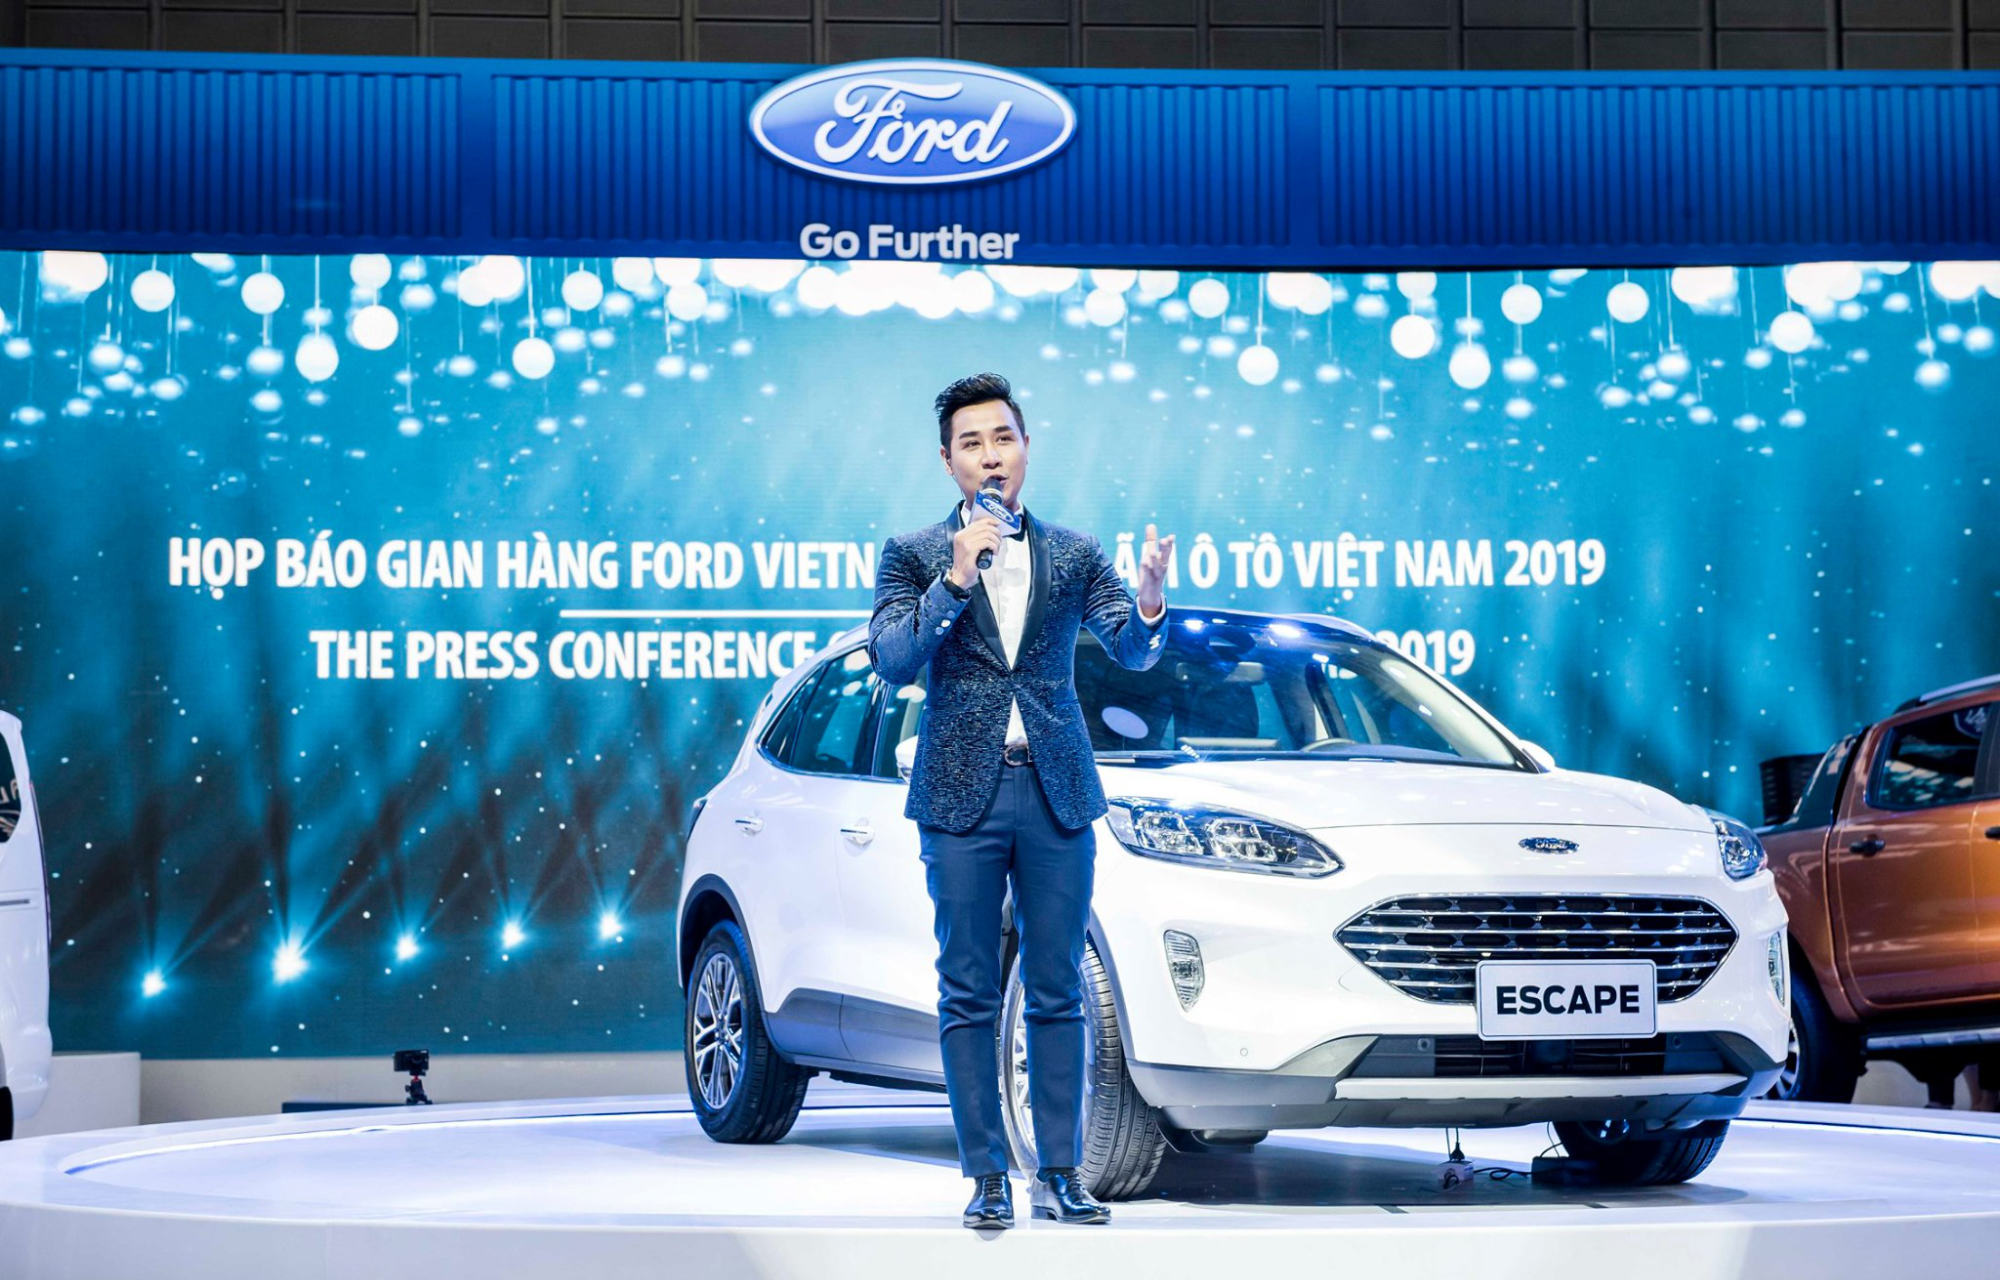 Motor-Show-Vietnam-City-Ford